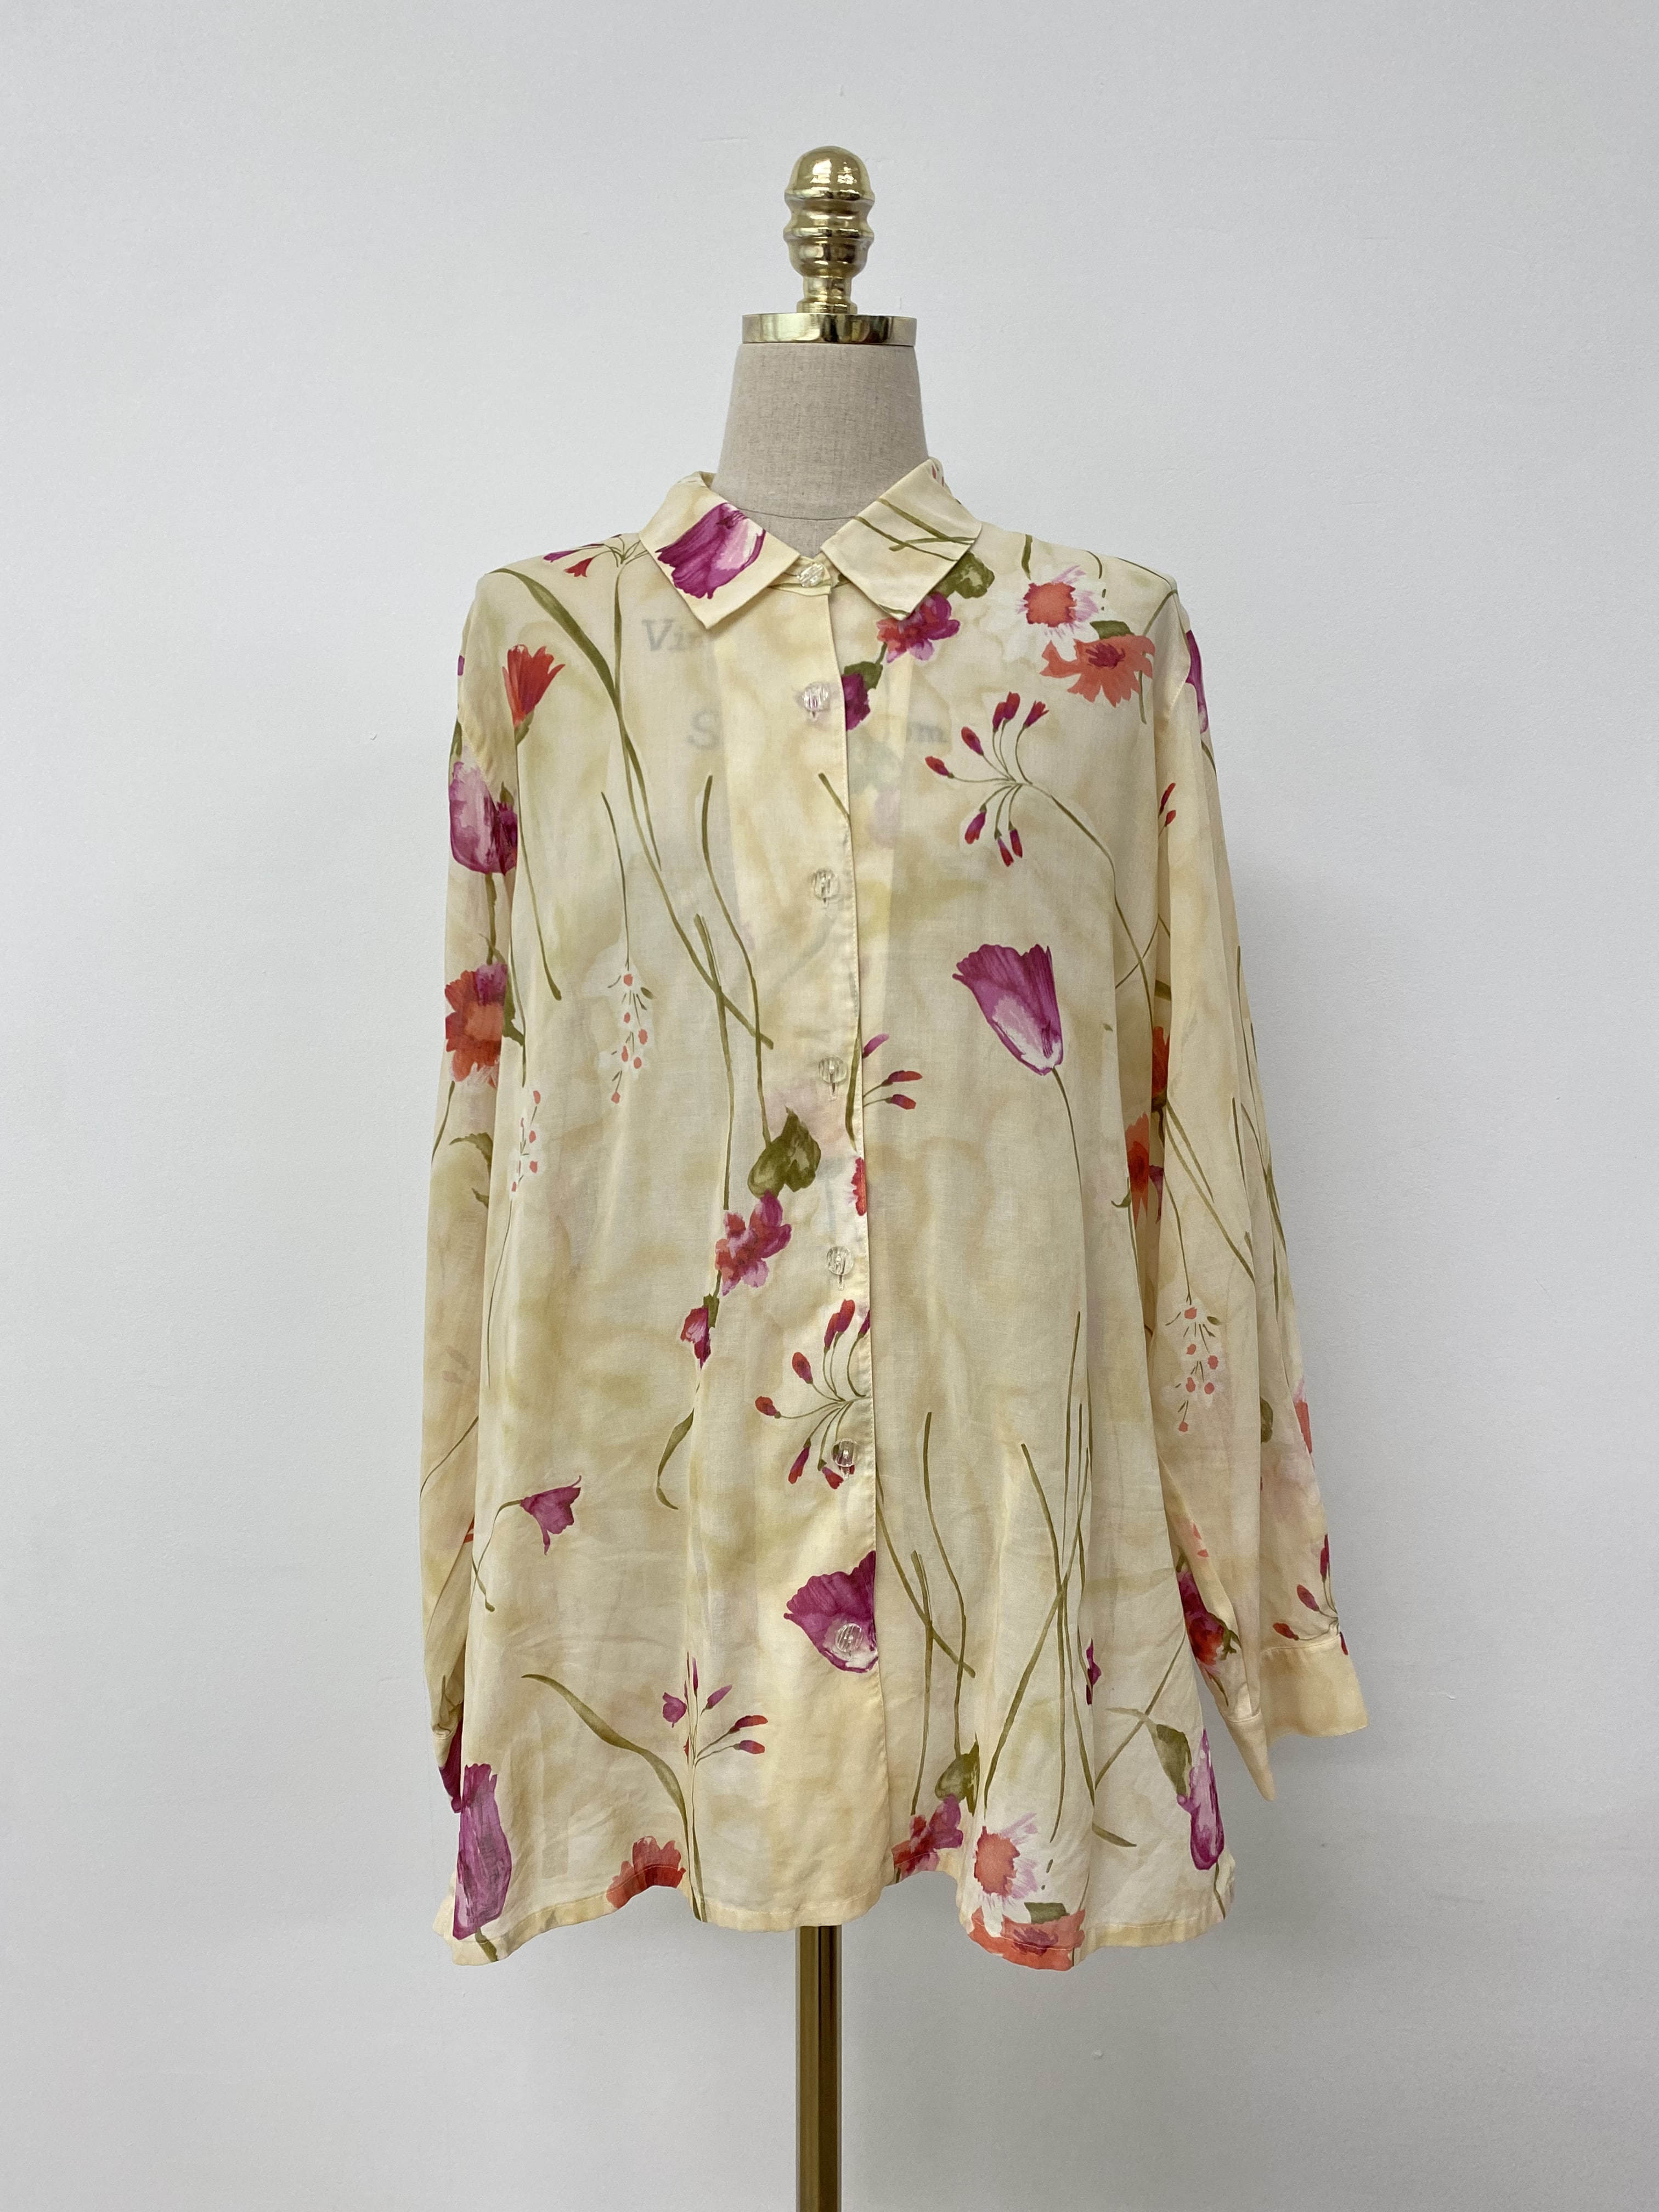 flower pattern see-through shirt